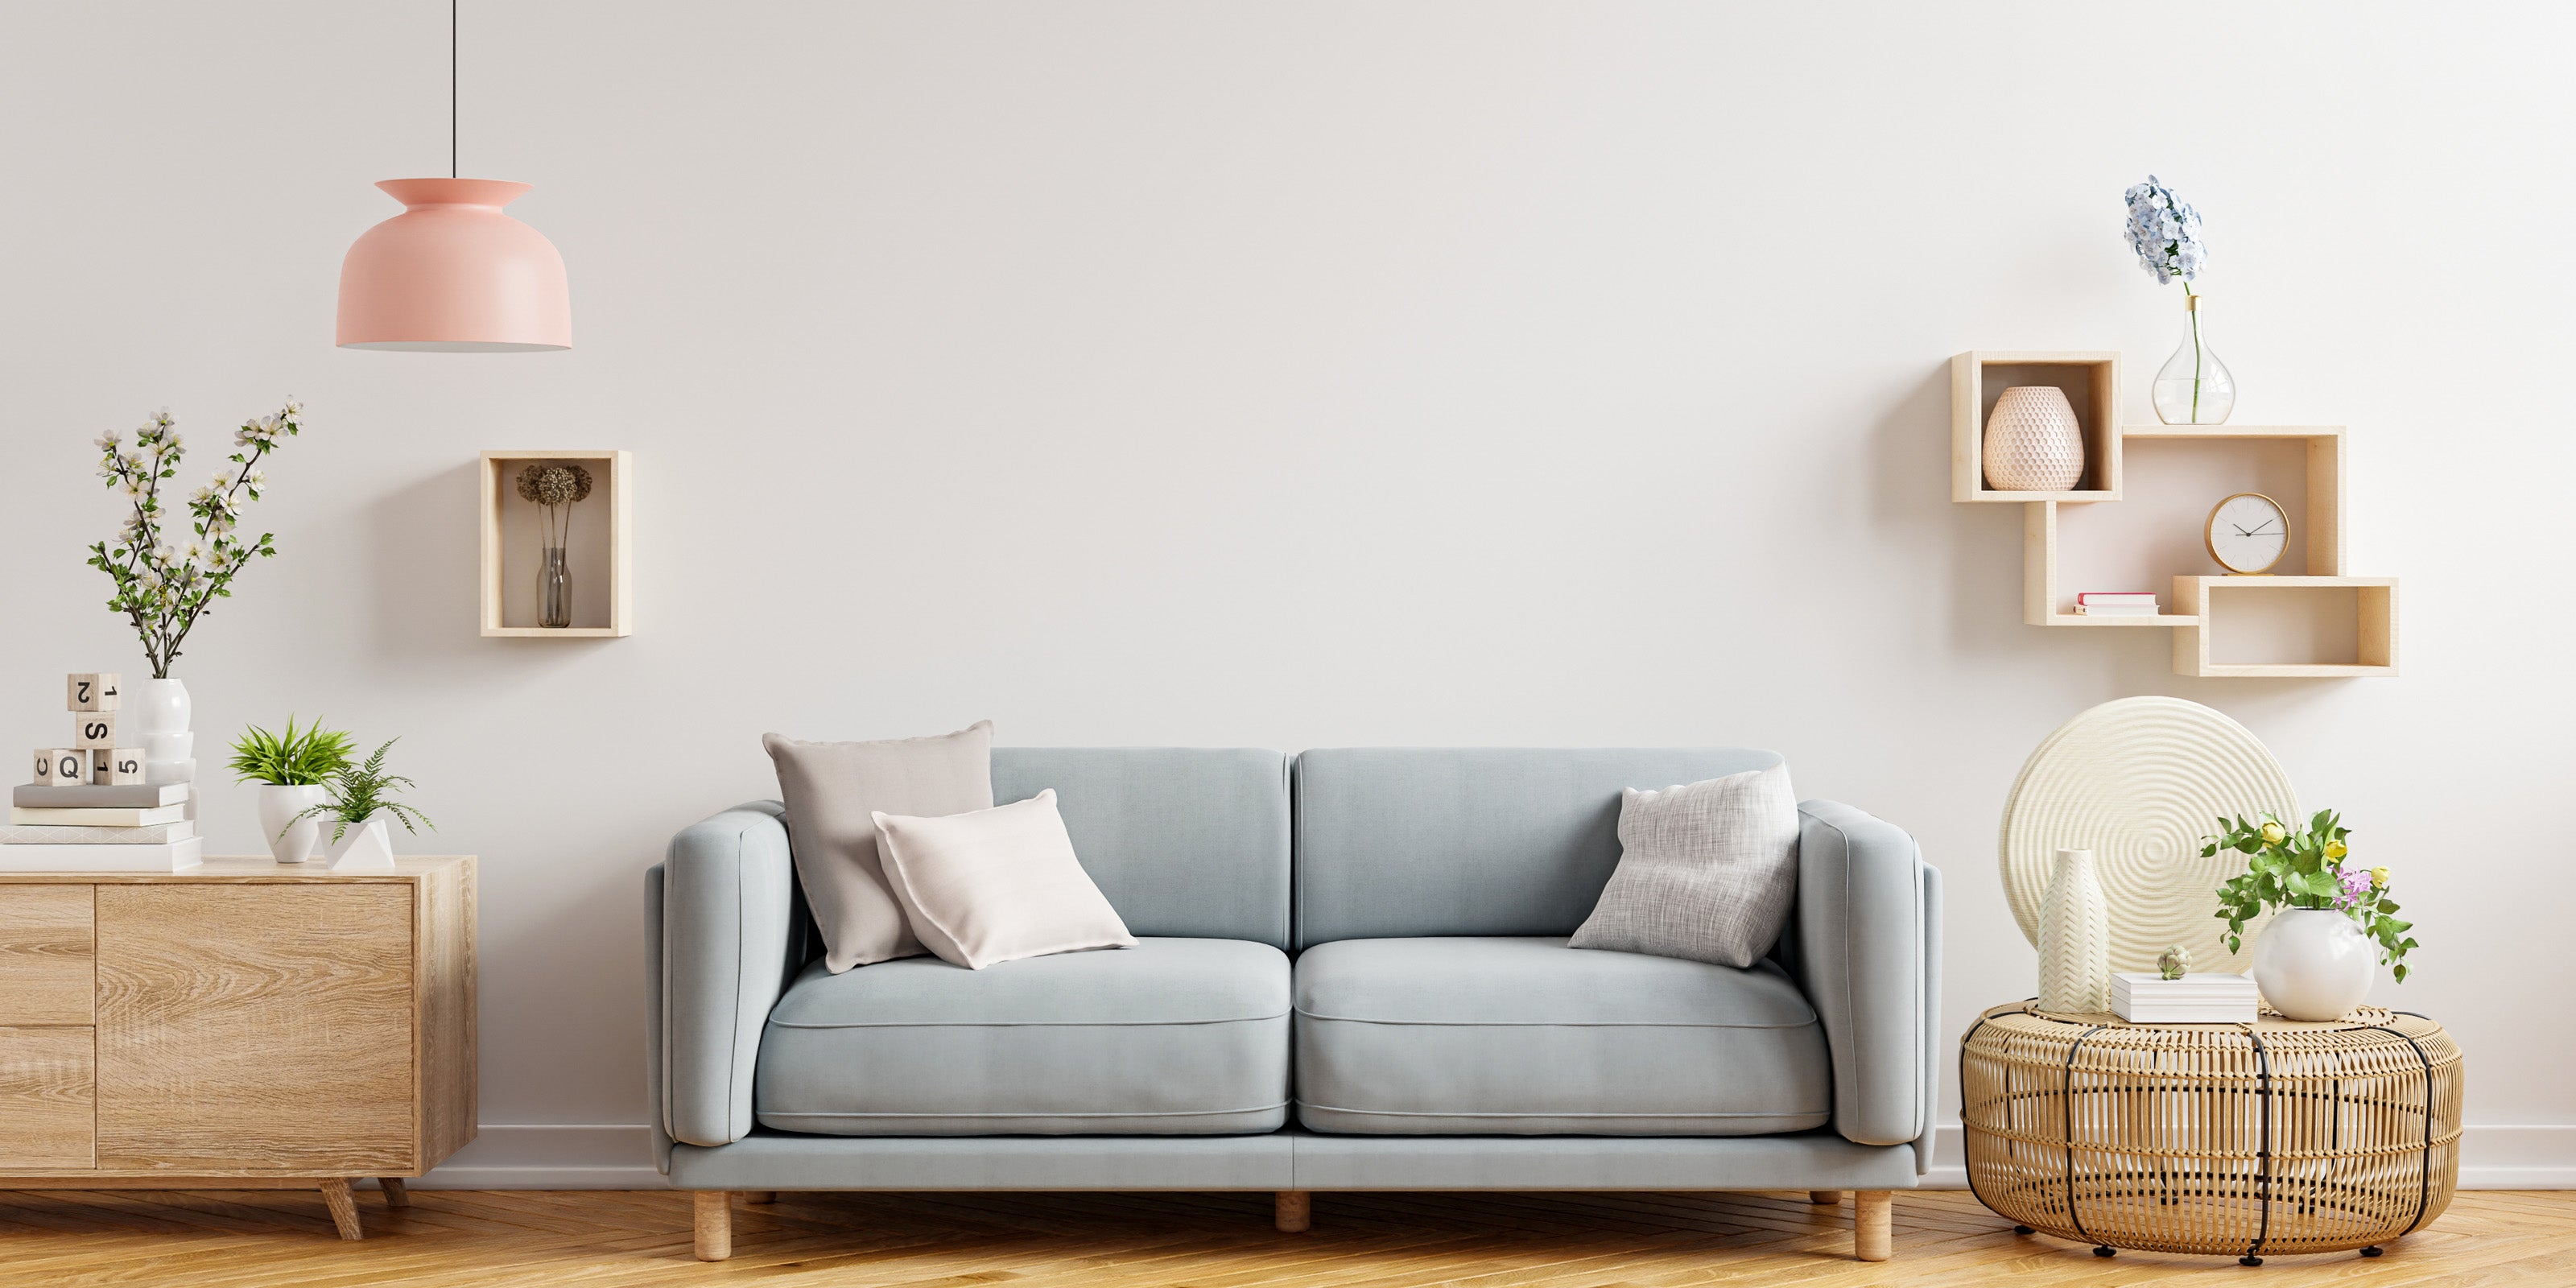 Linen cushion covers on a sofa